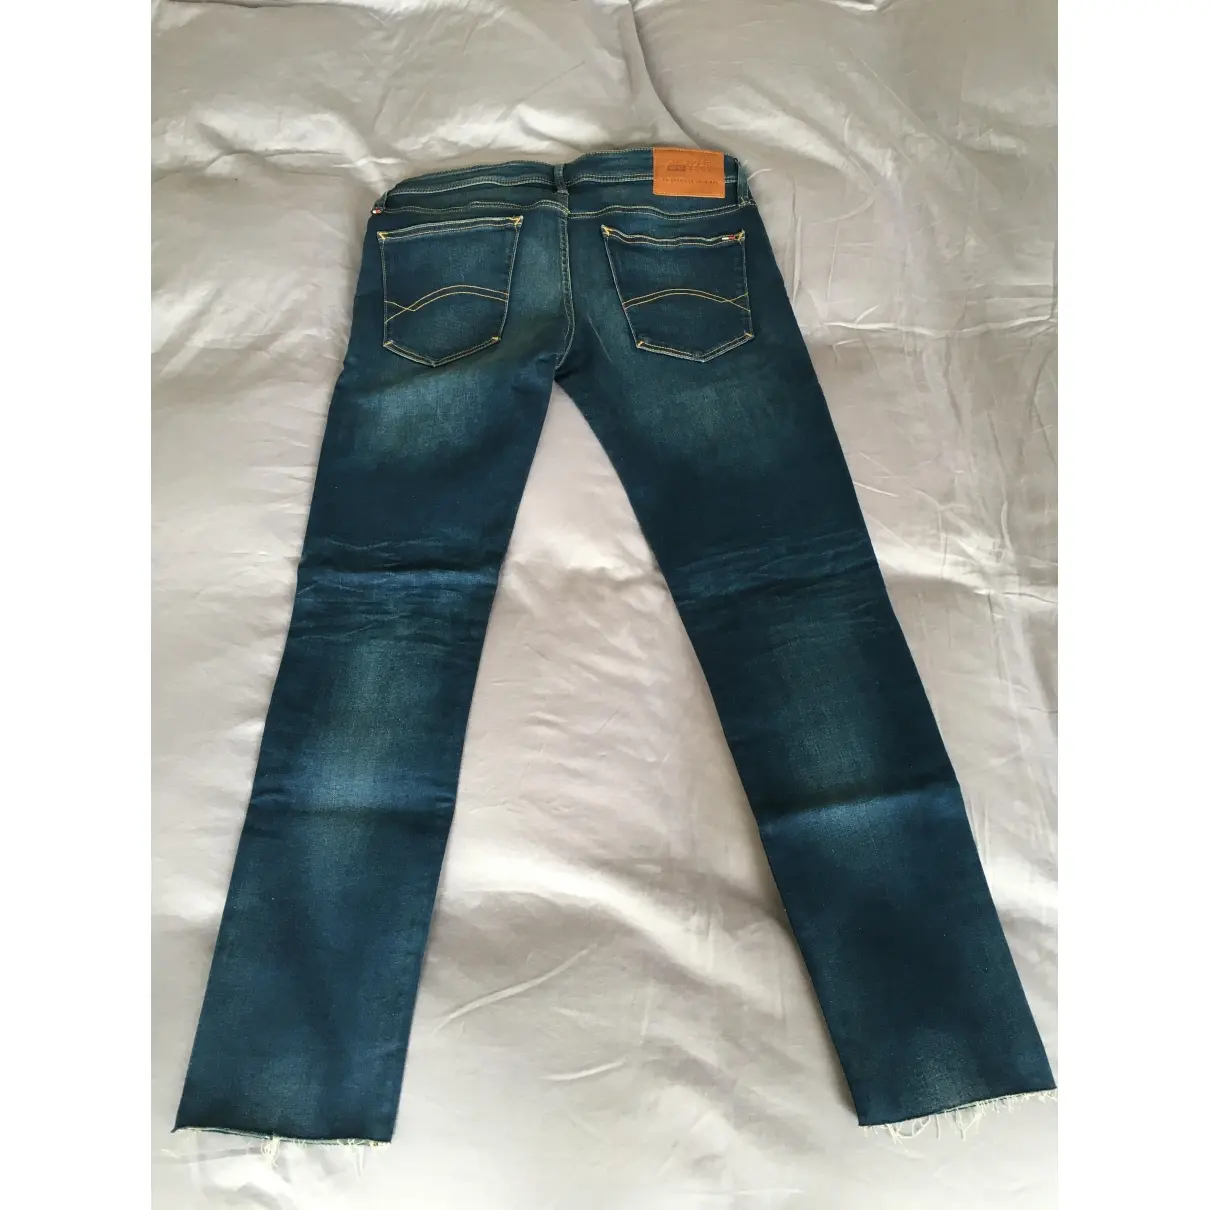 Buy Tommy Hilfiger Blue Cotton Jeans online